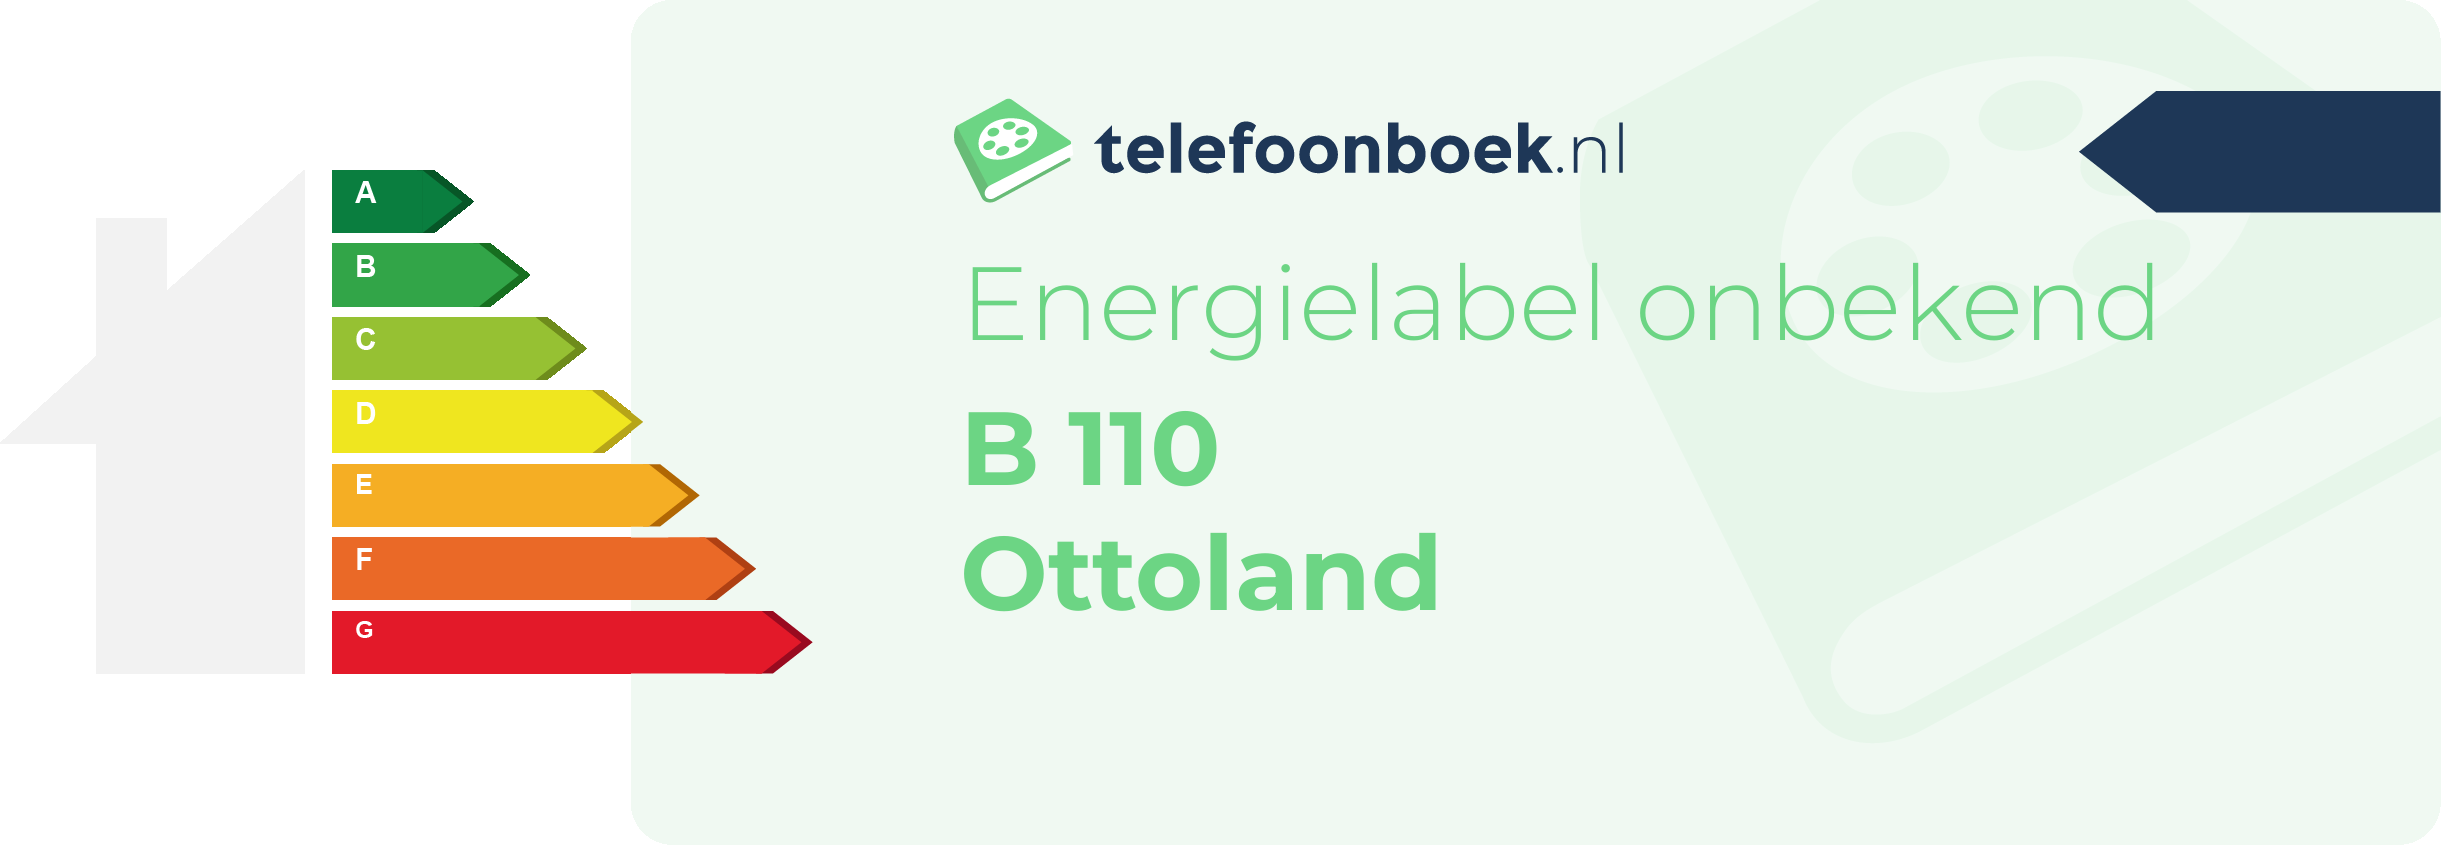 Energielabel B 110 Ottoland